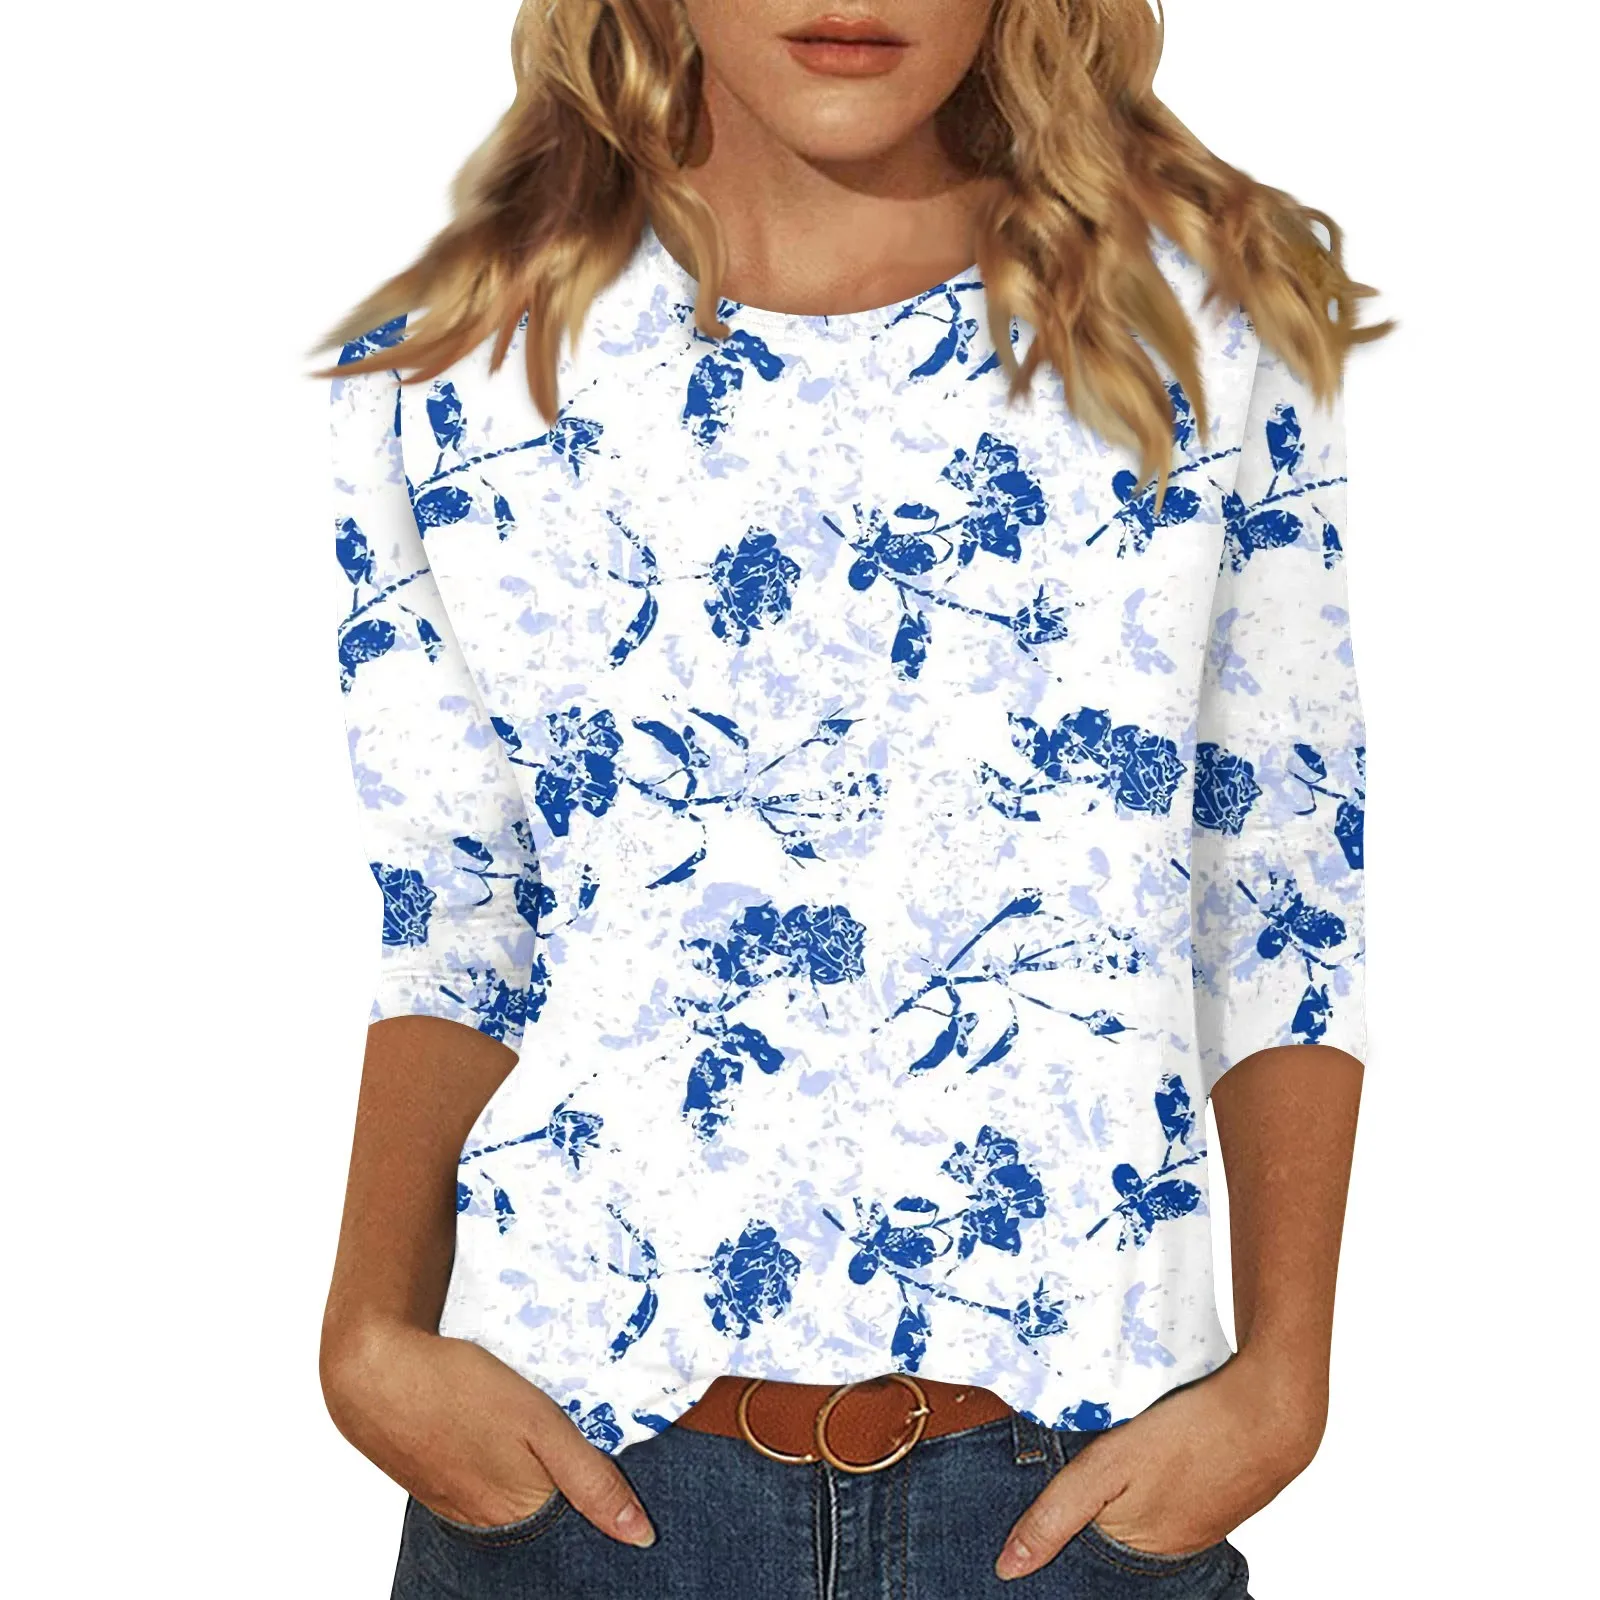 

Women's Casual 3/4 Sleeve T-Shirts c rew Neck Tops New Shirt Top футболка топ женский قمصان وبلوزات женская одежда